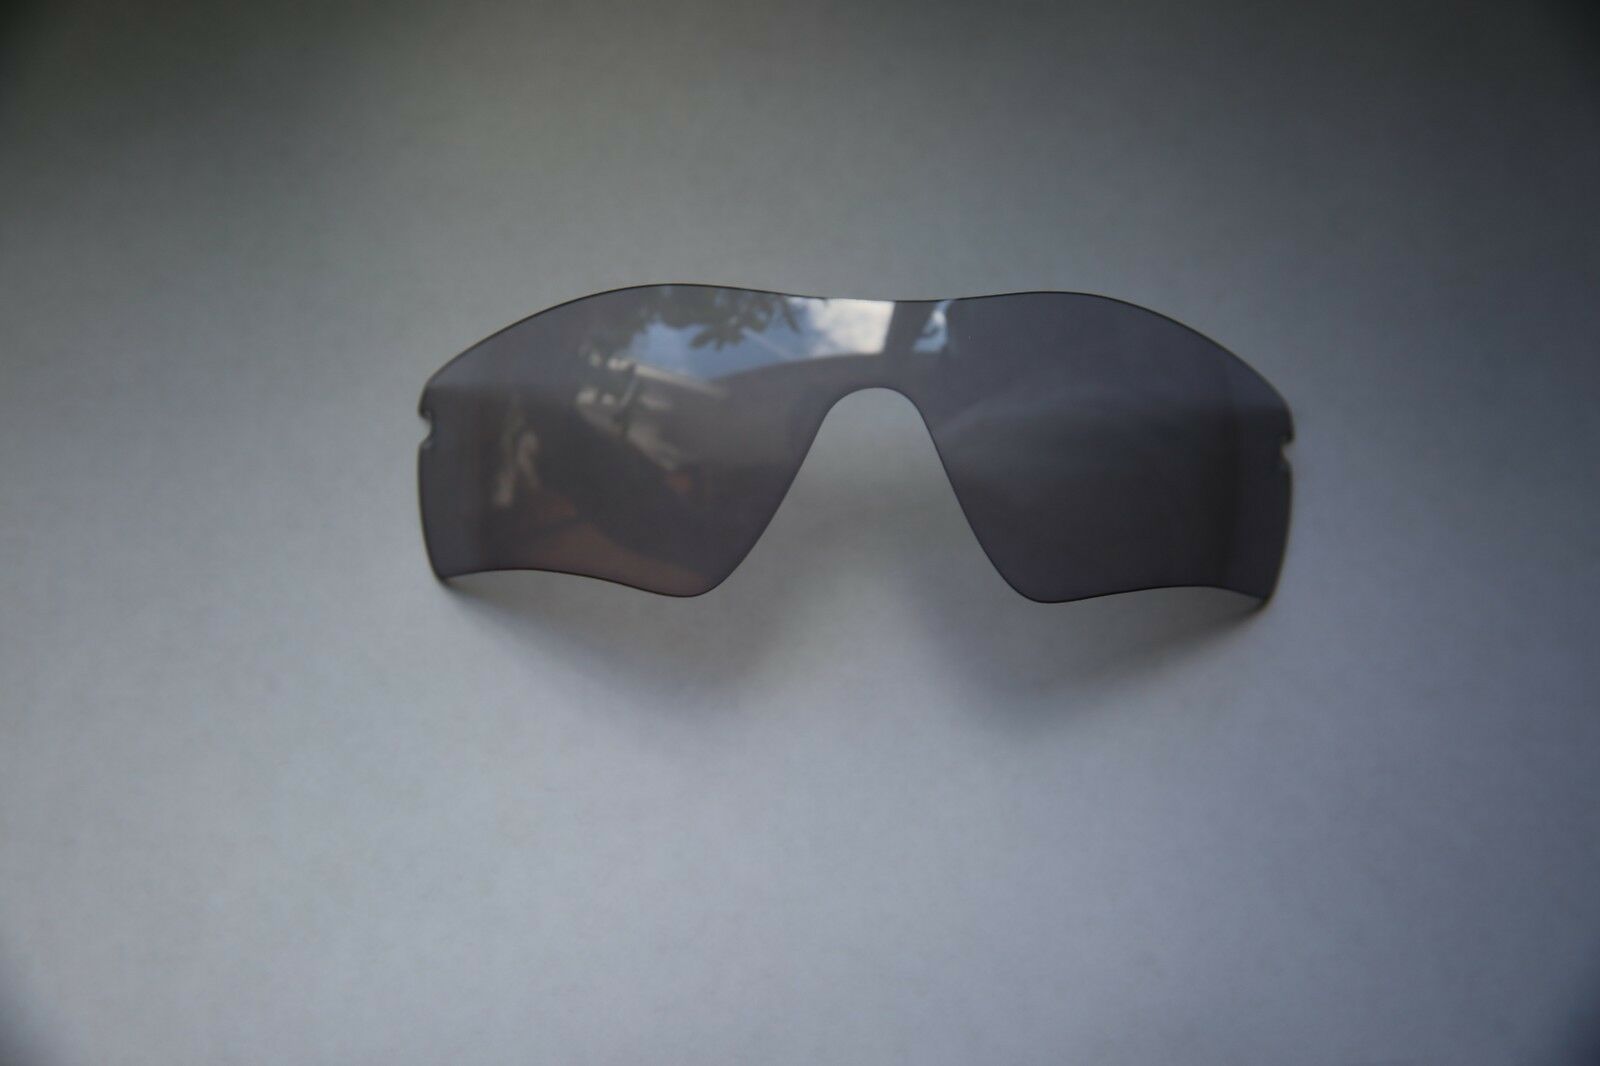 PolarLens Photochromic Replacement Lens for-Oakley Radar Path sunglasses